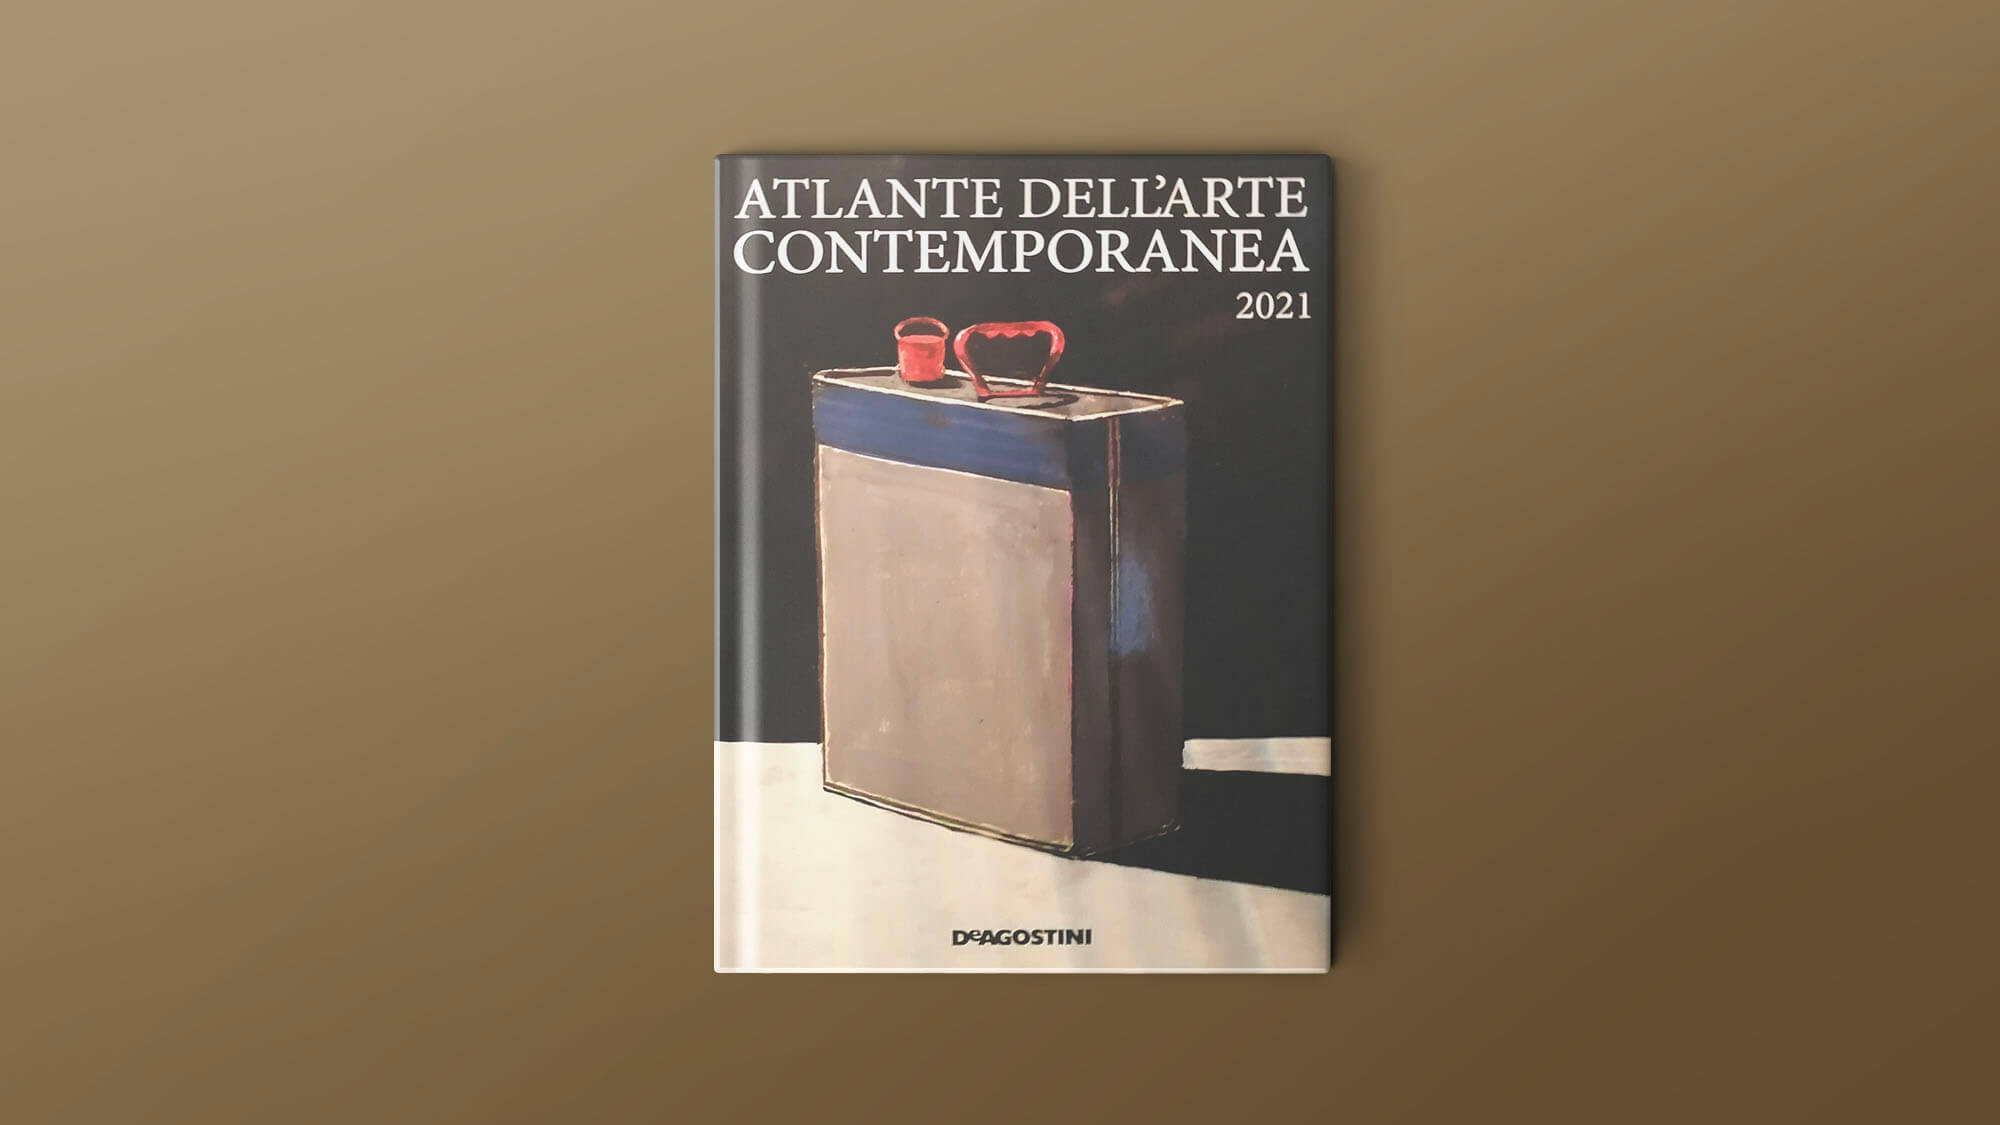 Giuseppe Gallo, design series Digital Quarantine published on the Contemporary Atlas of Art by De Agostini